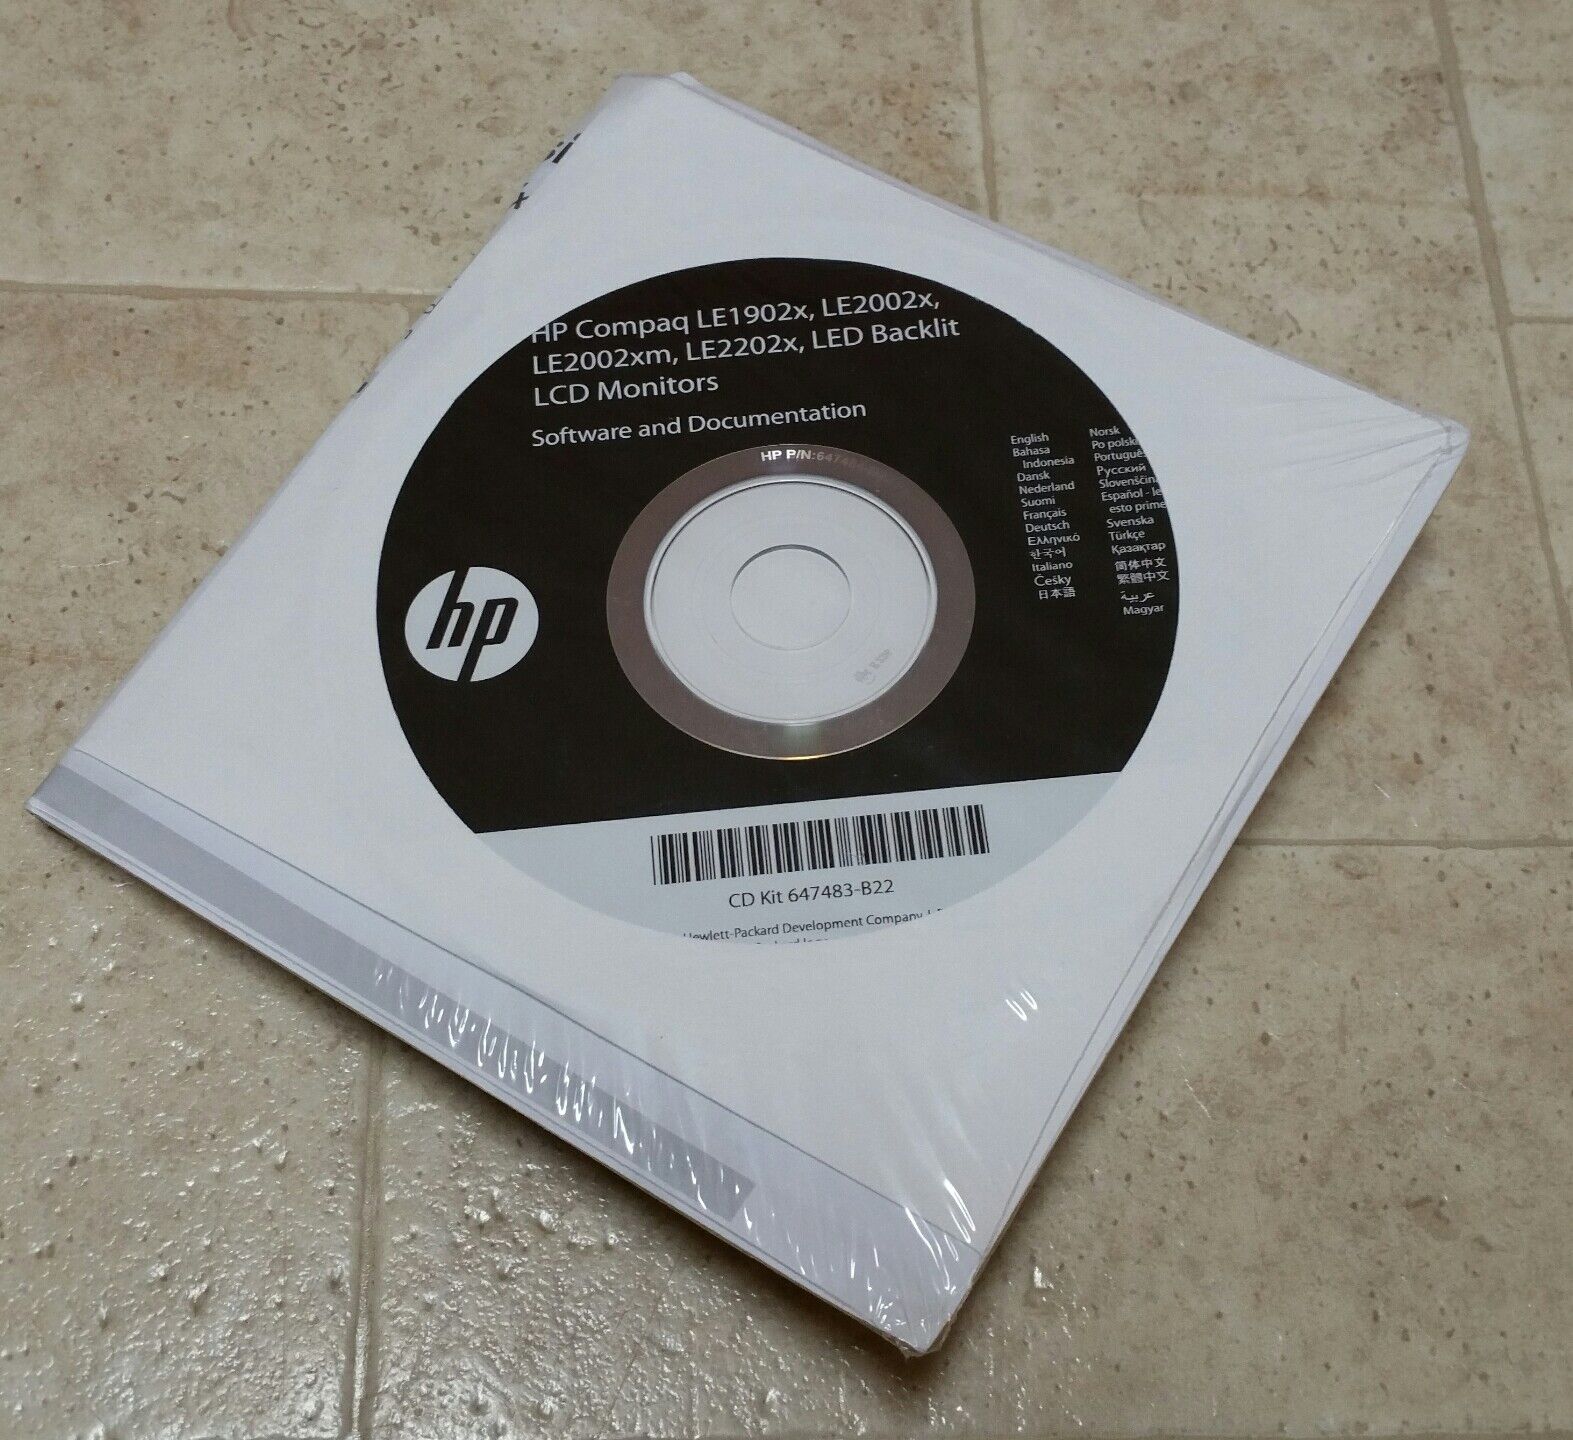 HP / Compaq Monitor Software and Documentation CD - CD Kit 647483-B22 